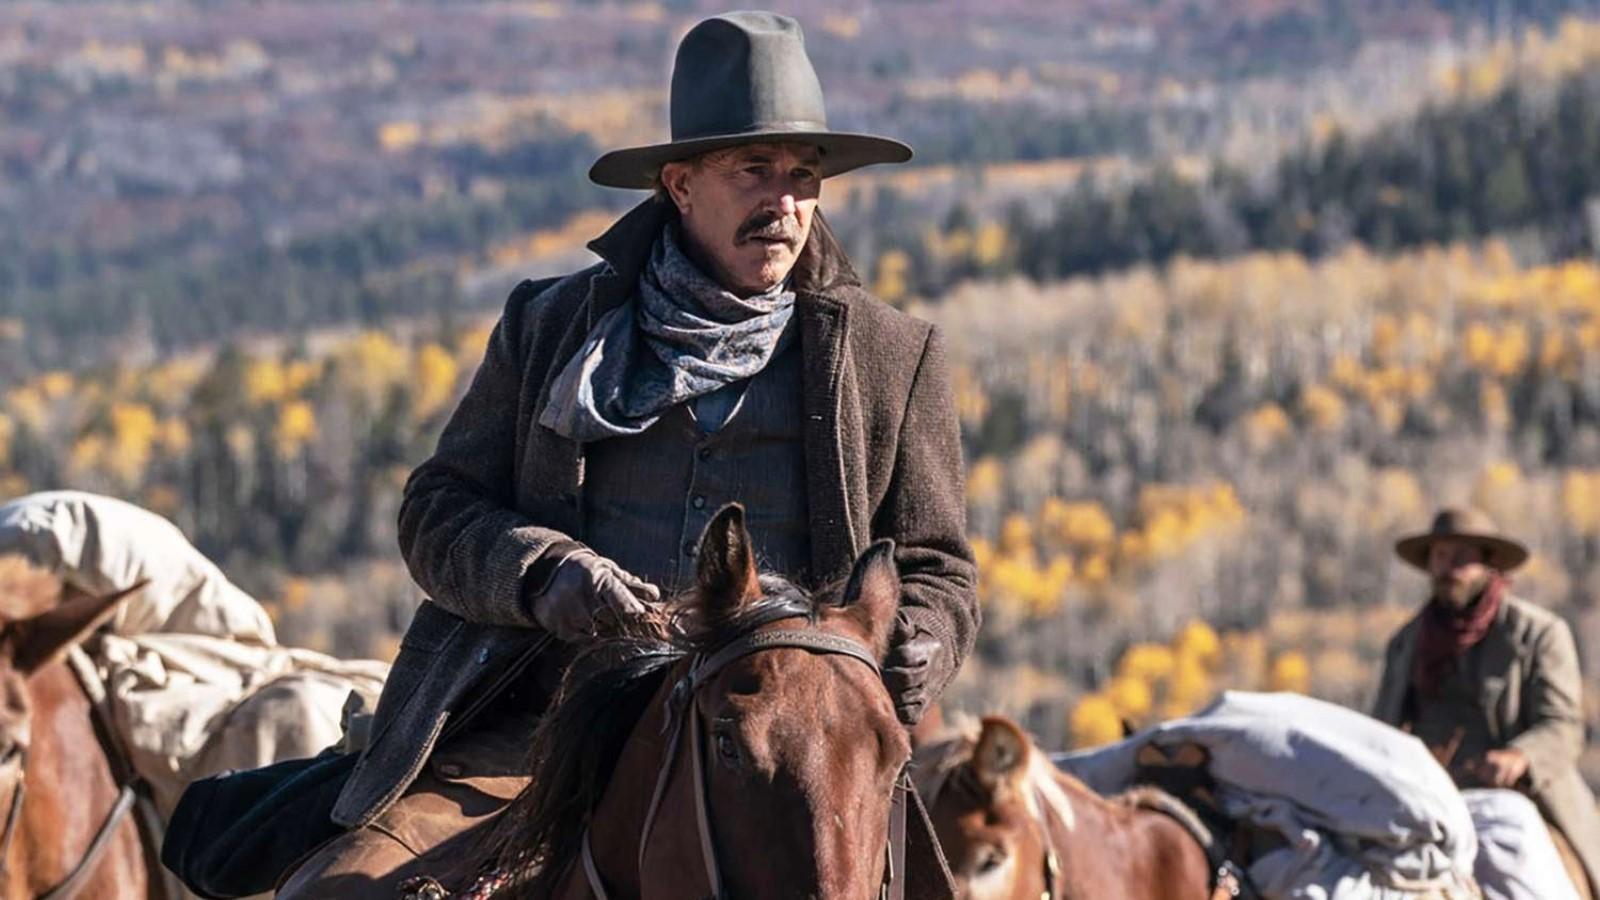 Kevin Costner as Hayes Ellison in Horizon: An American Saga, riding a horse